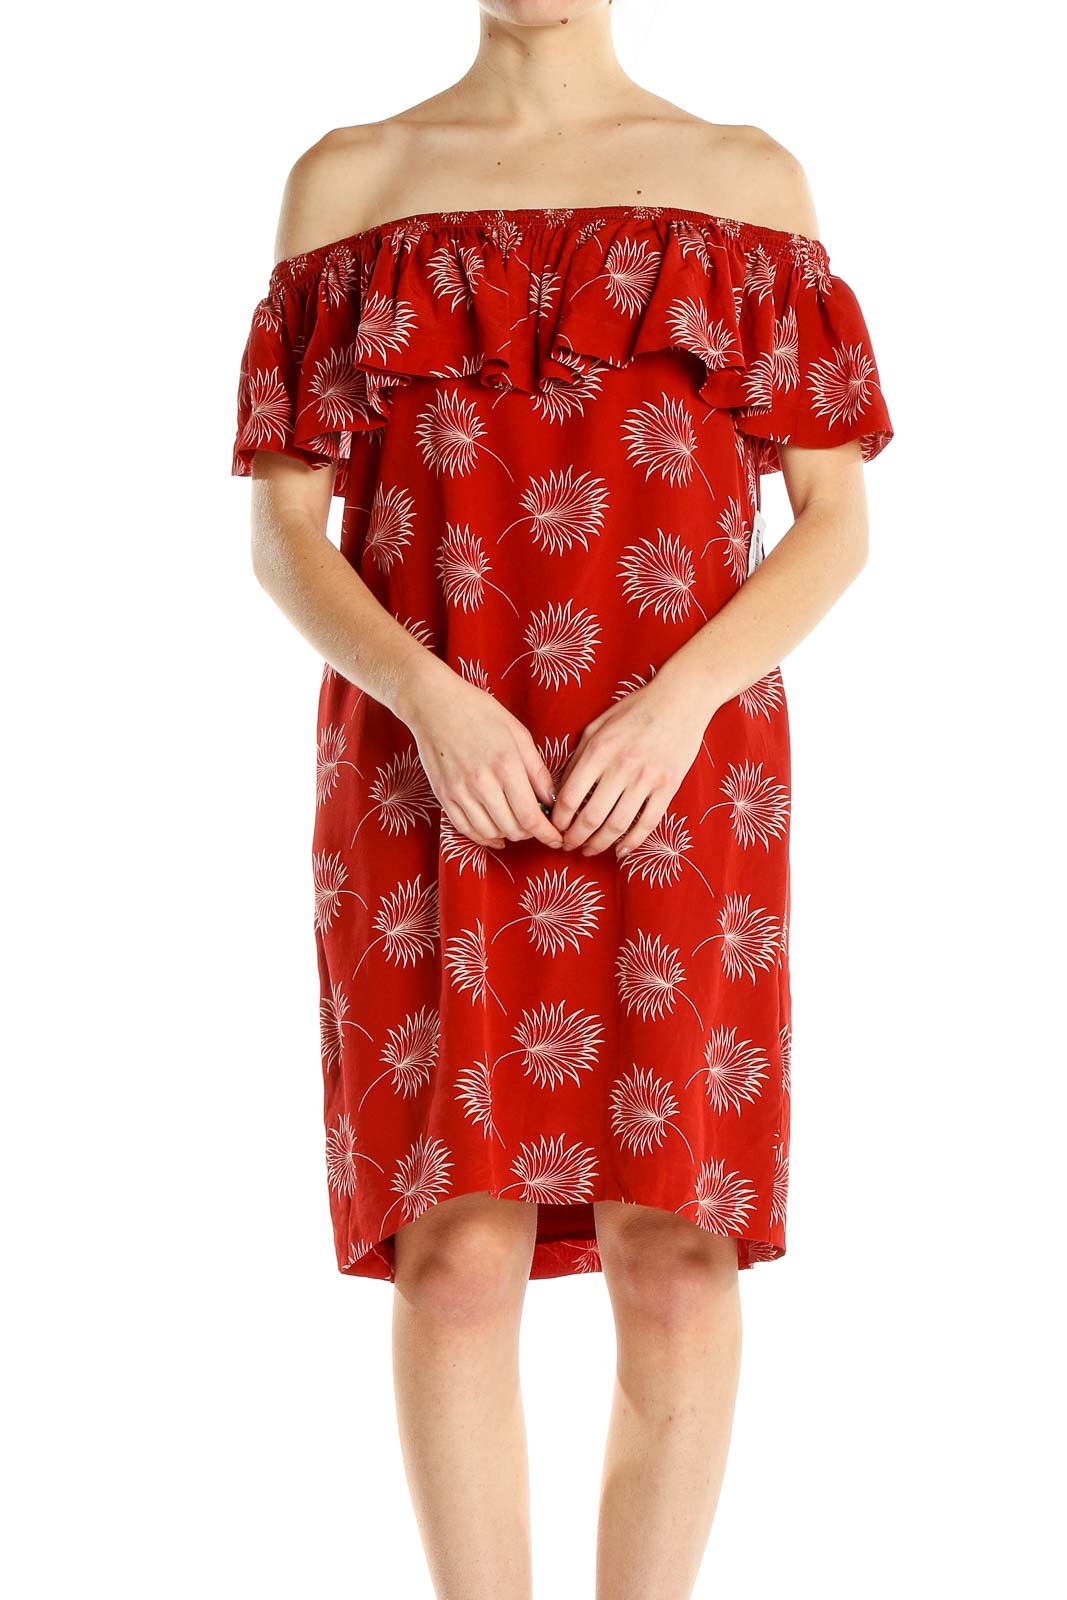 Red Floral Print Holiday Off The Shoulder Shift Dress Front